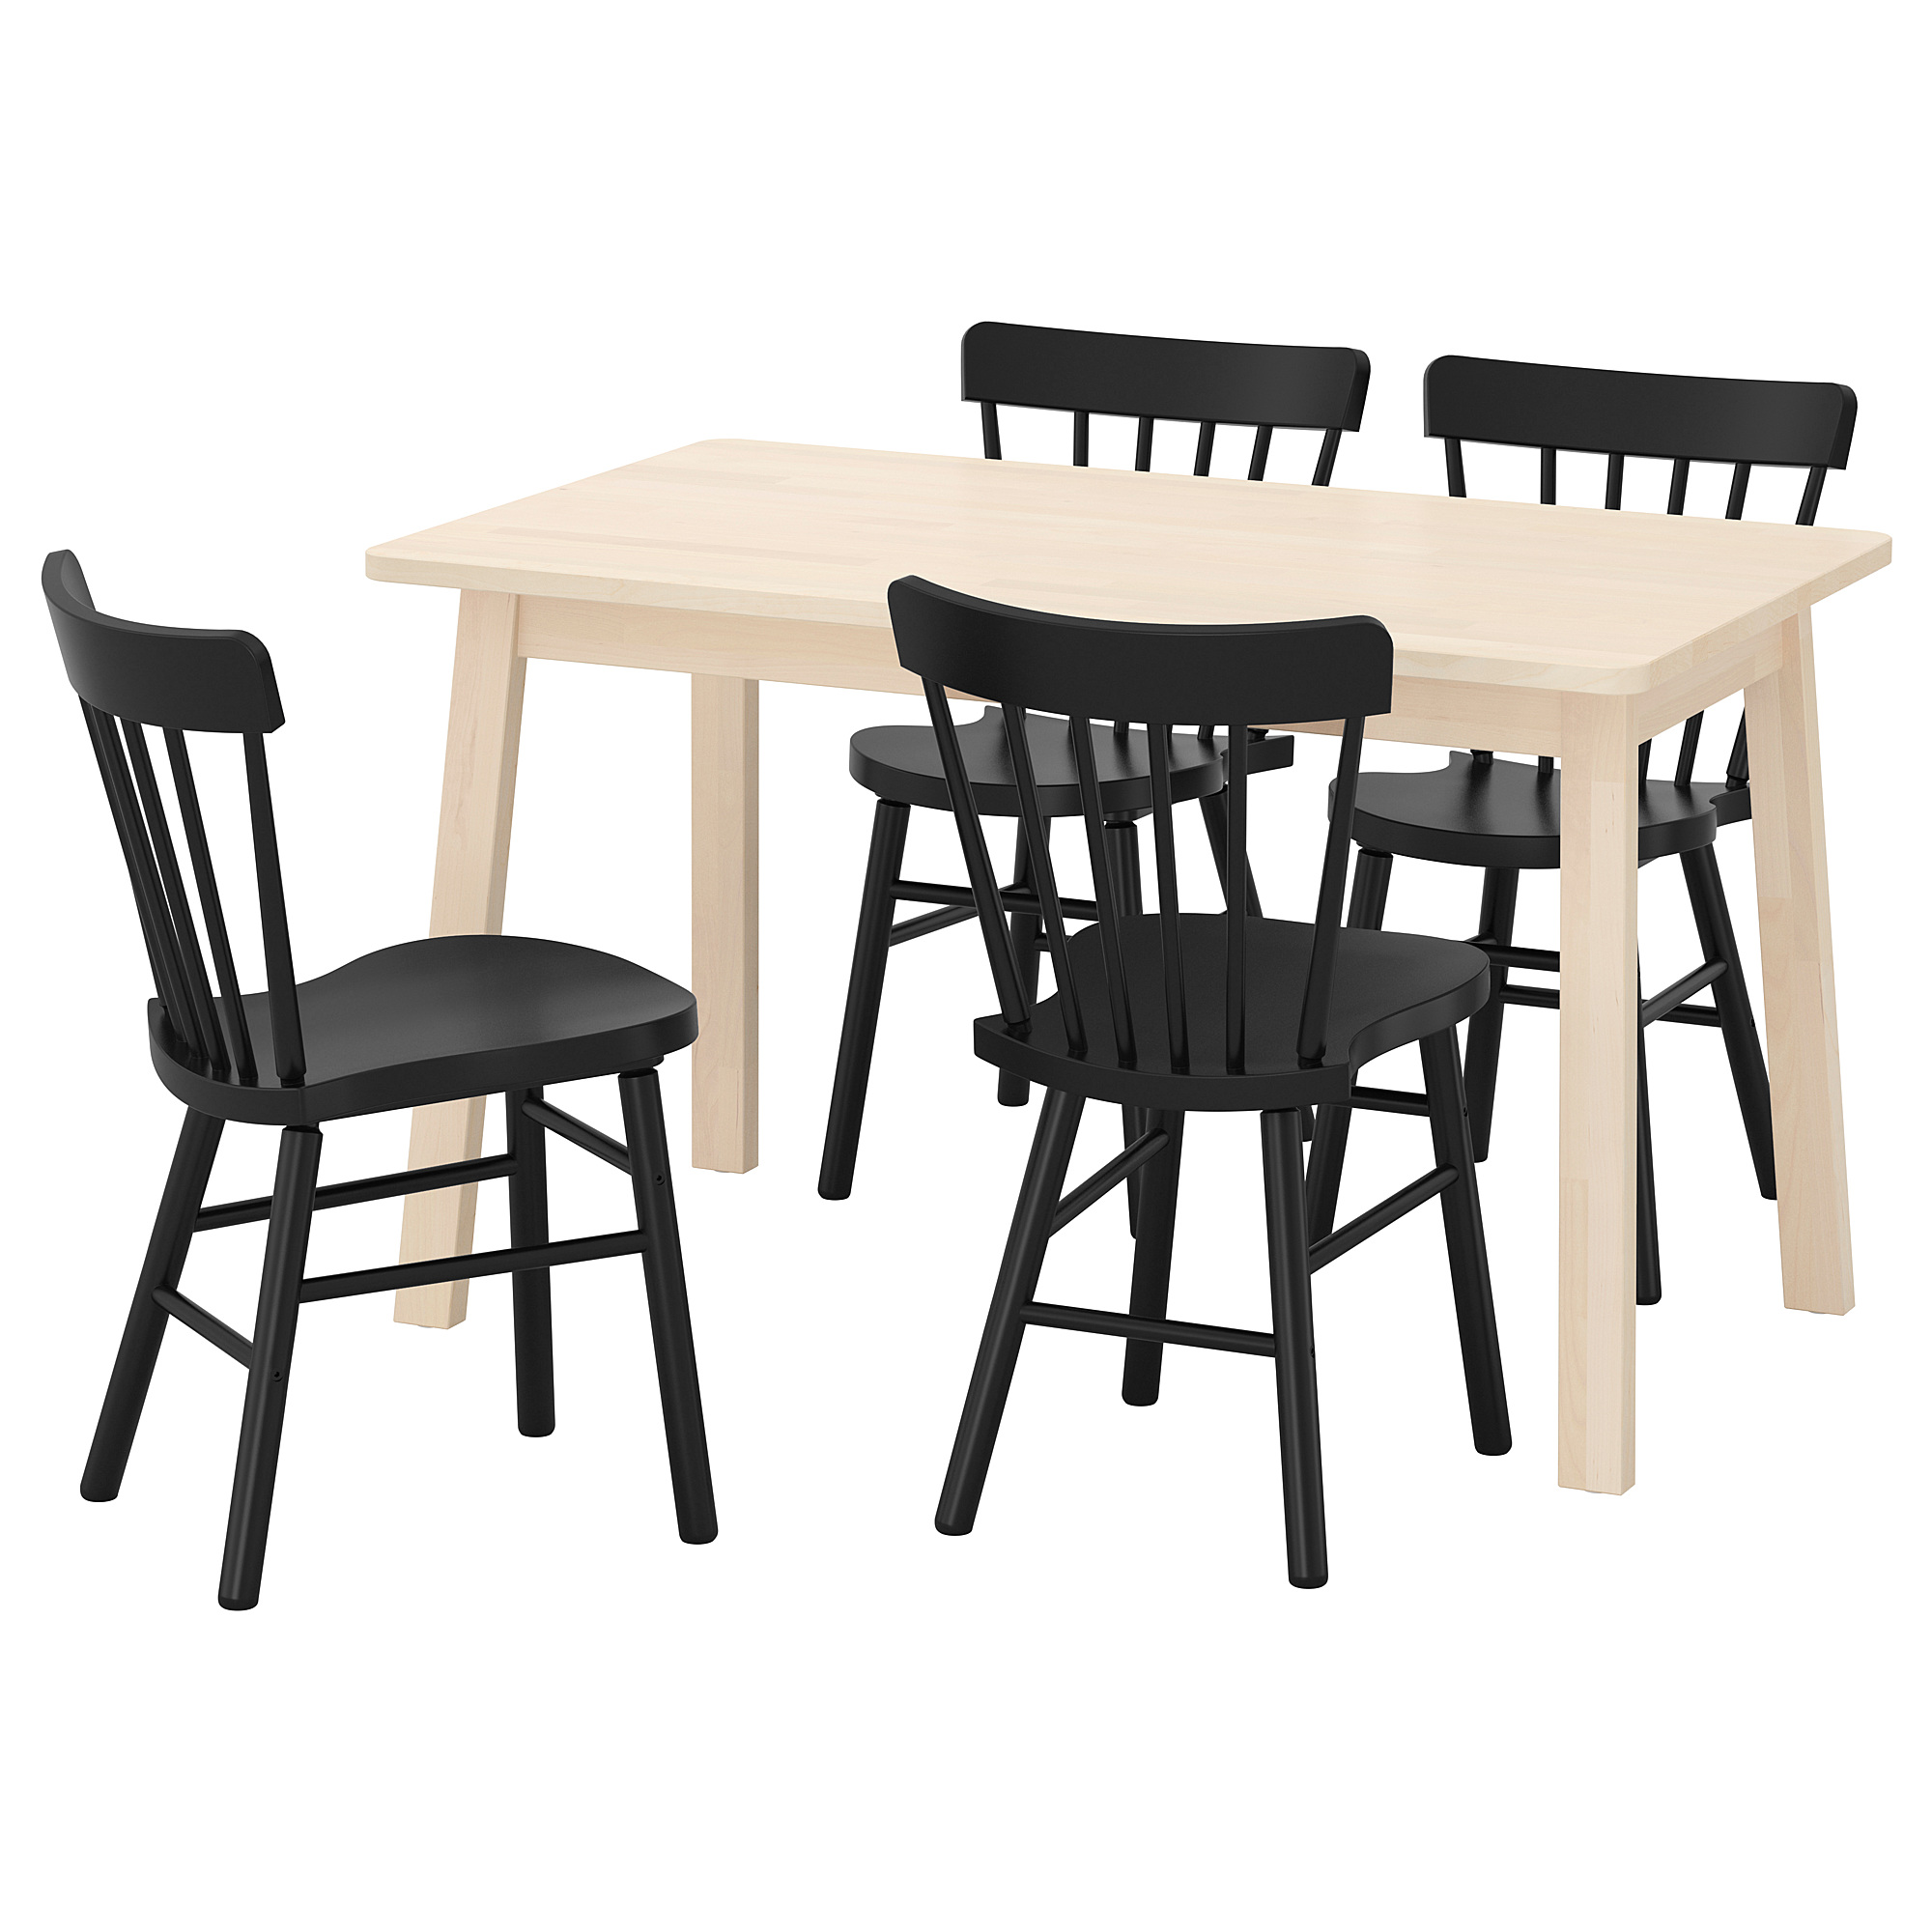 NORRÅKER/NORRARYD 餐桌附4張餐椅